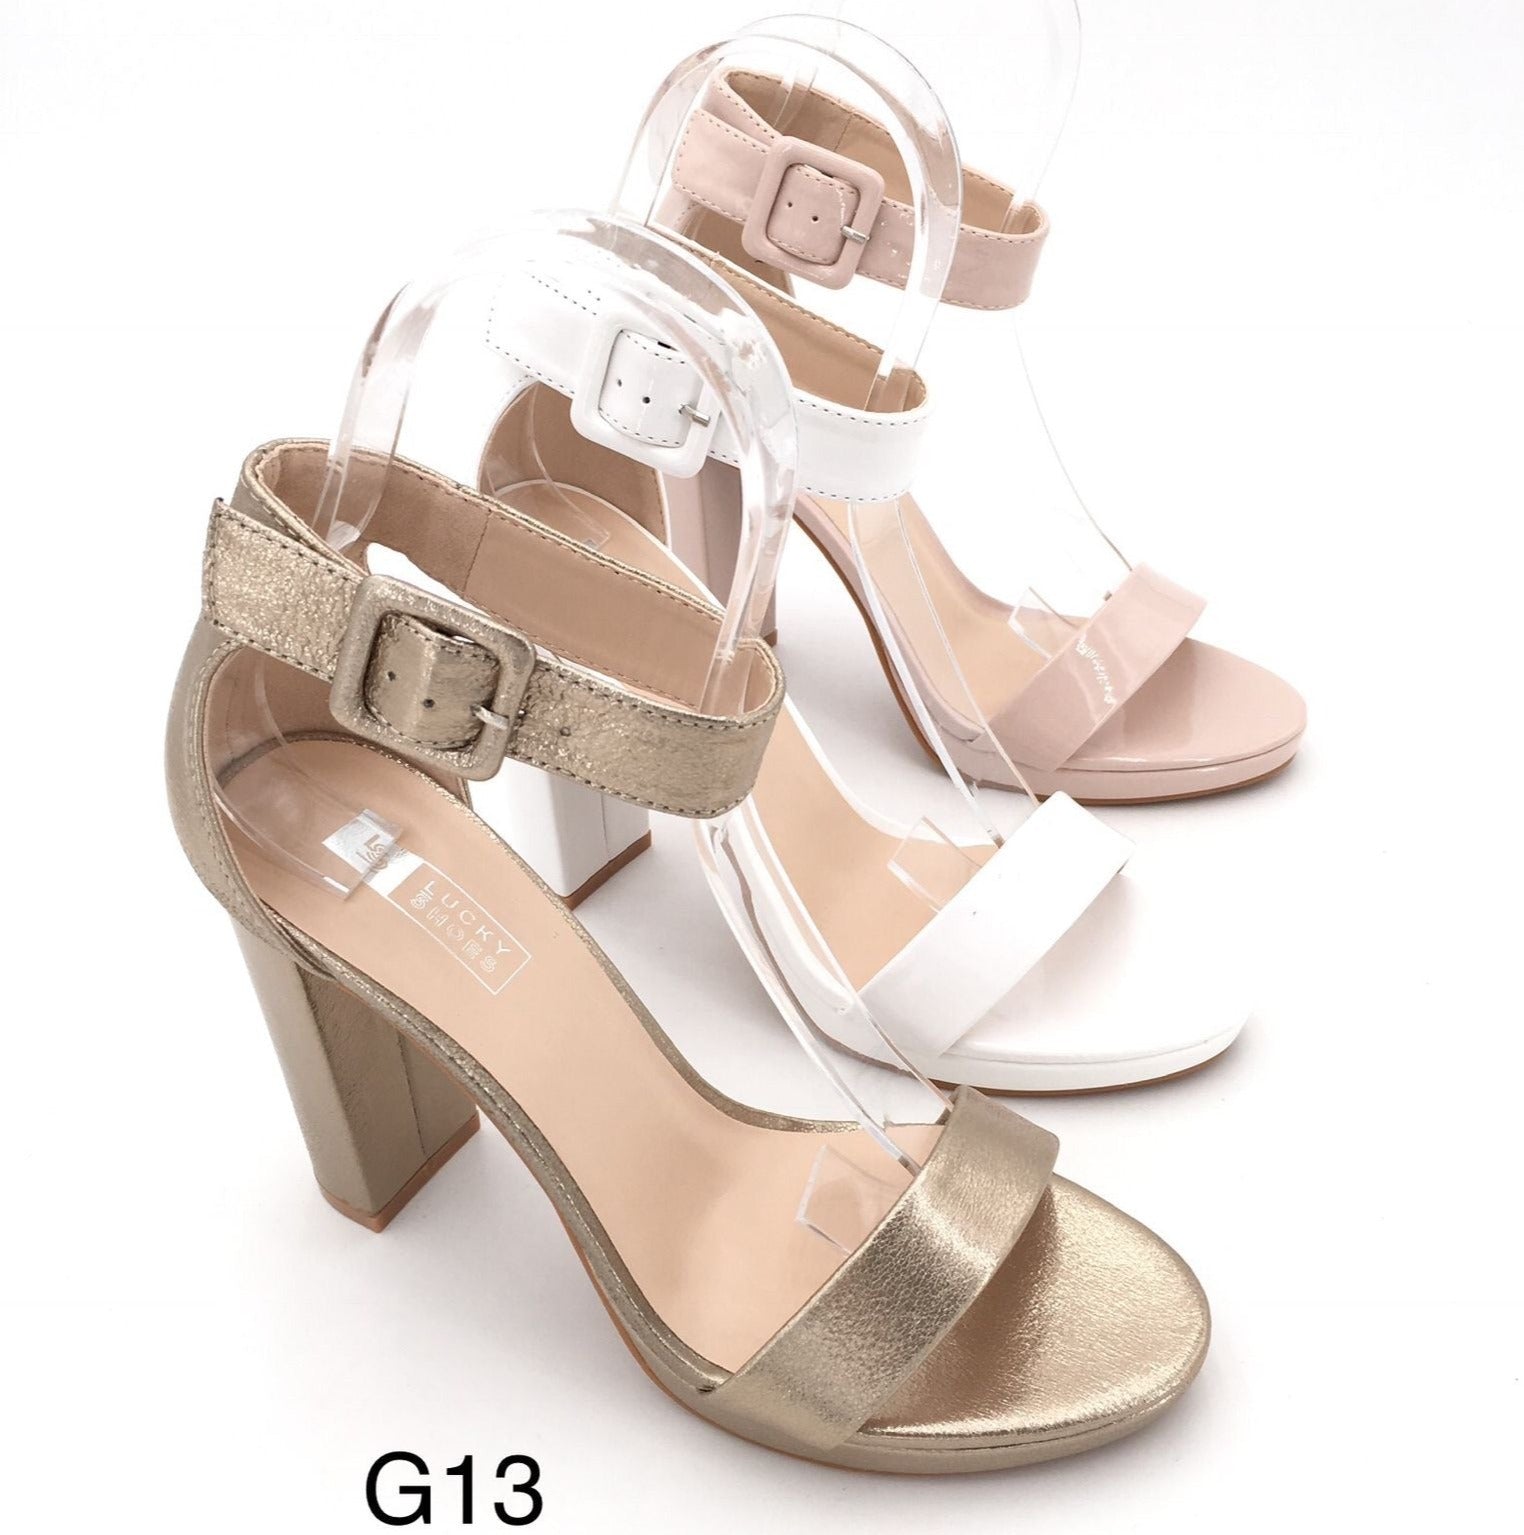 G13 White Heels